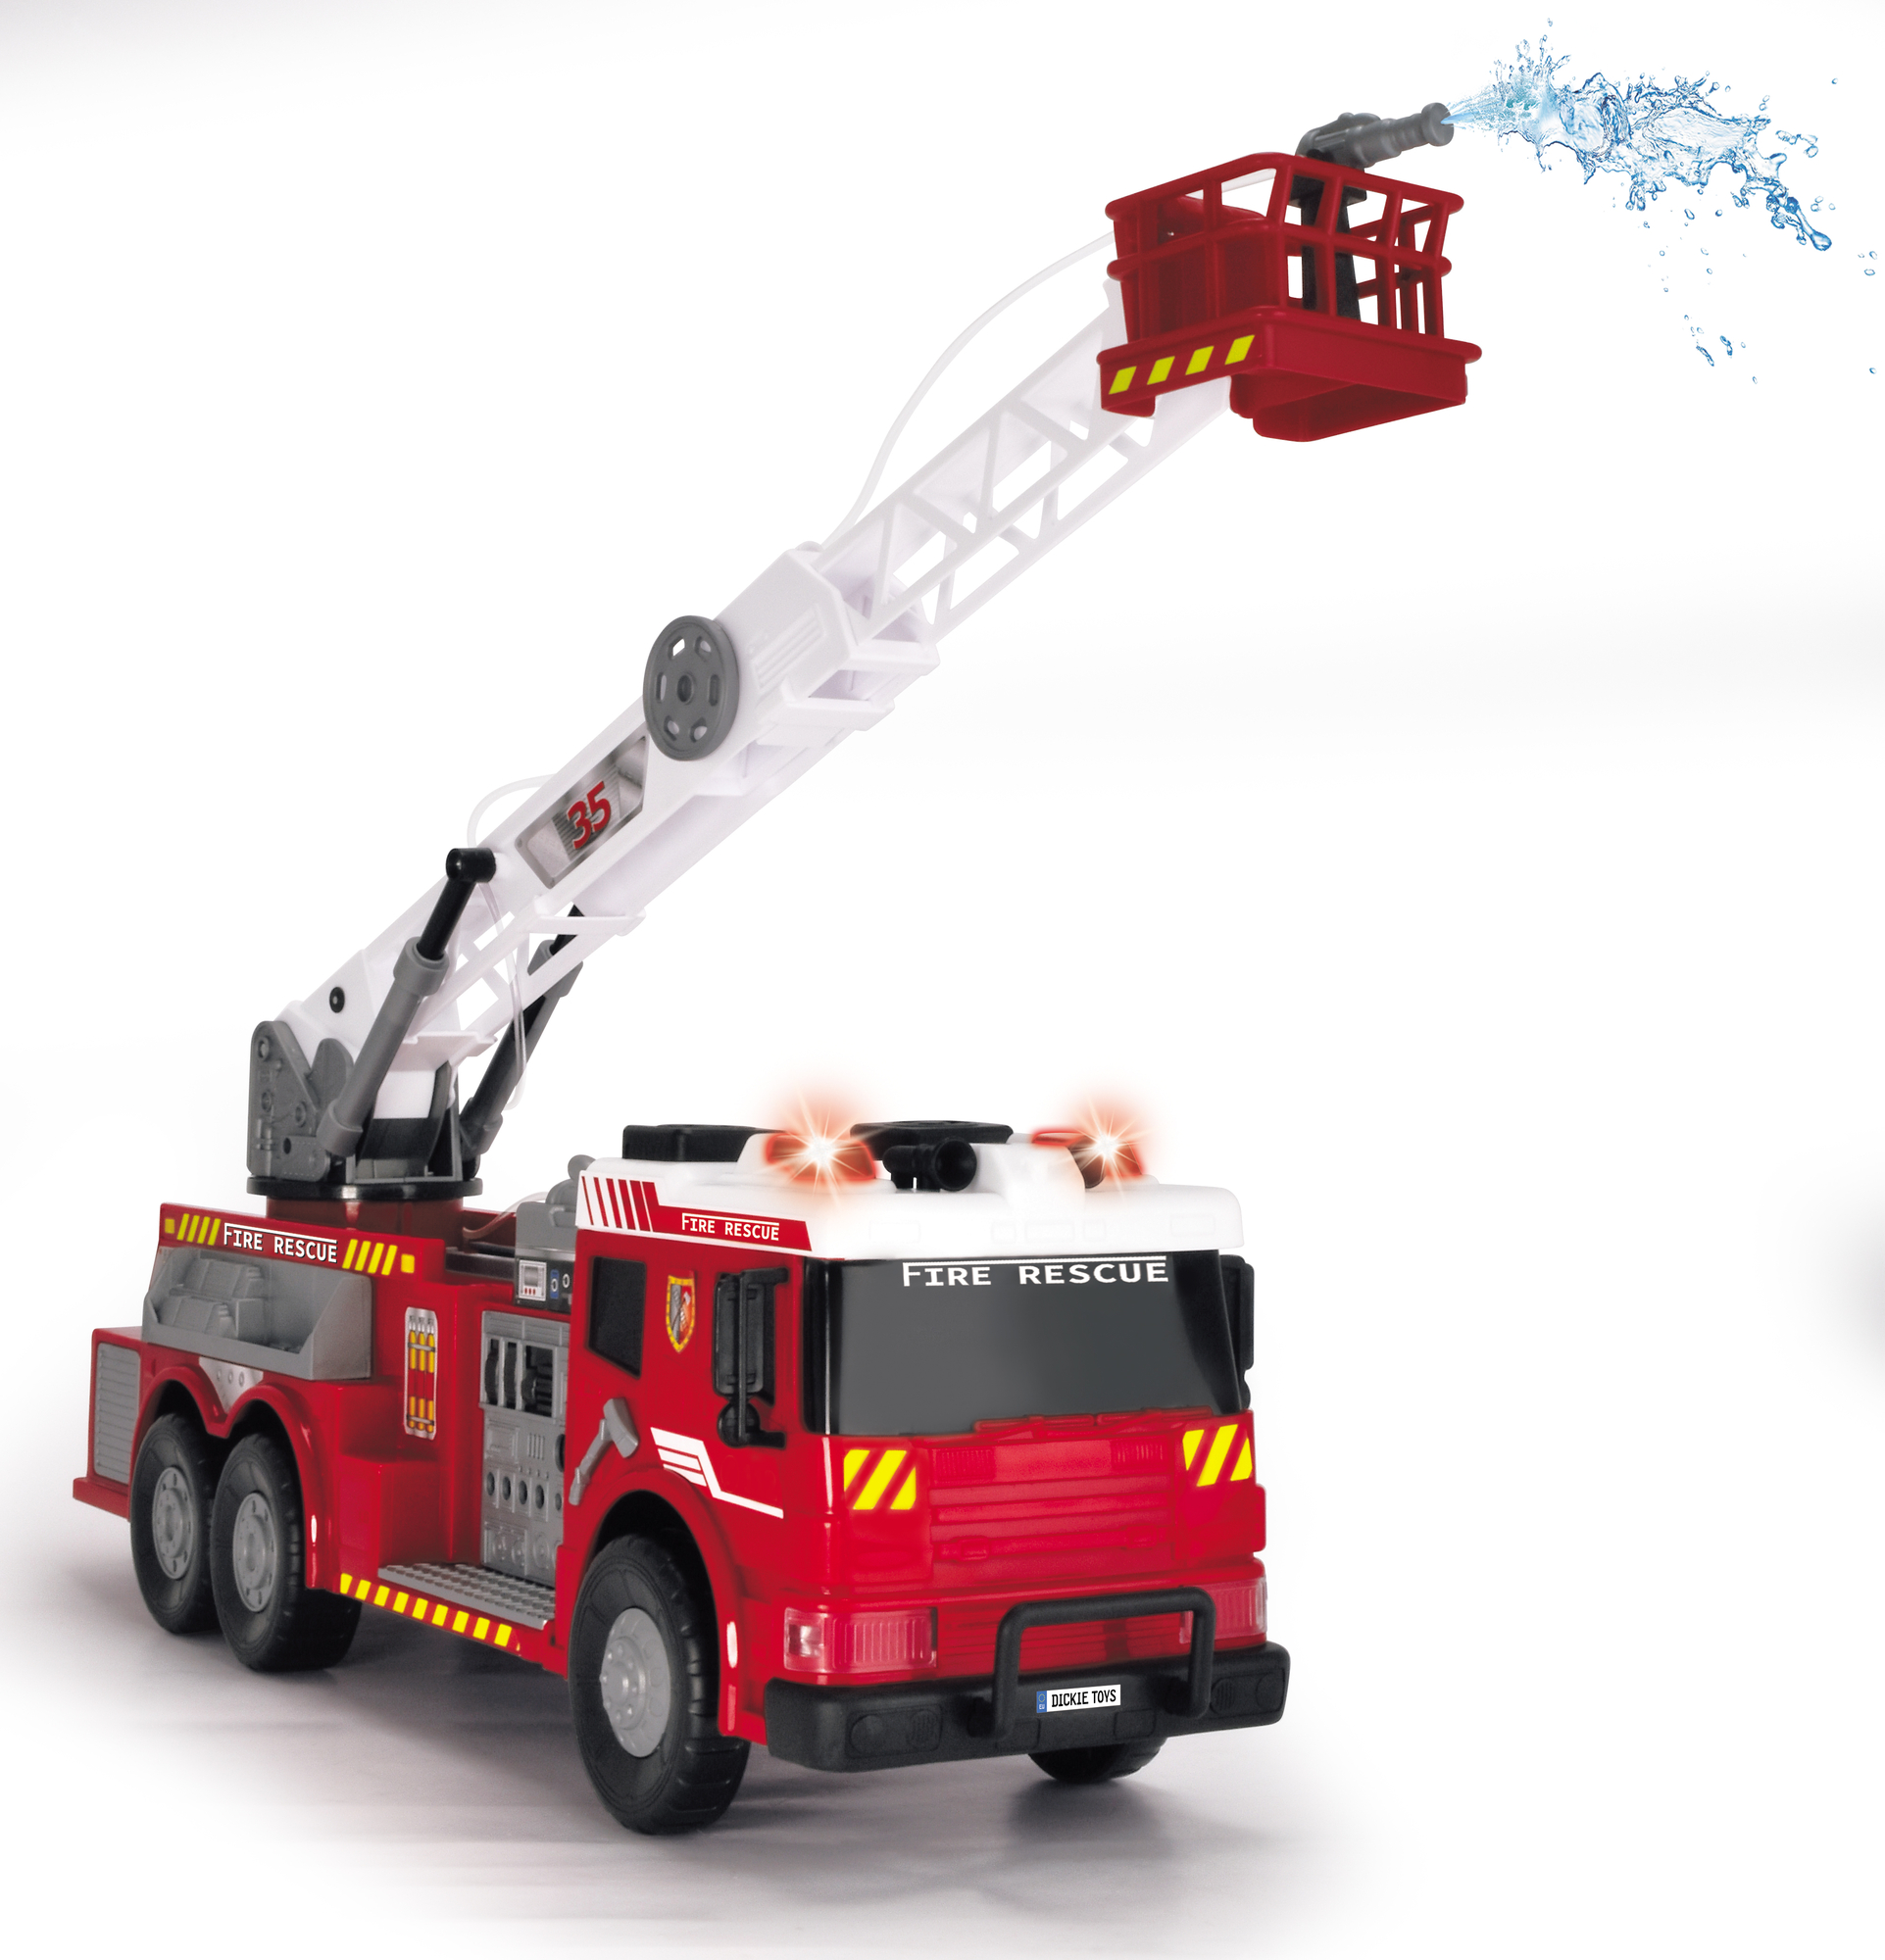 Brigade Mehrfarbig Spielzeugauto Fire DICKIE-TOYS